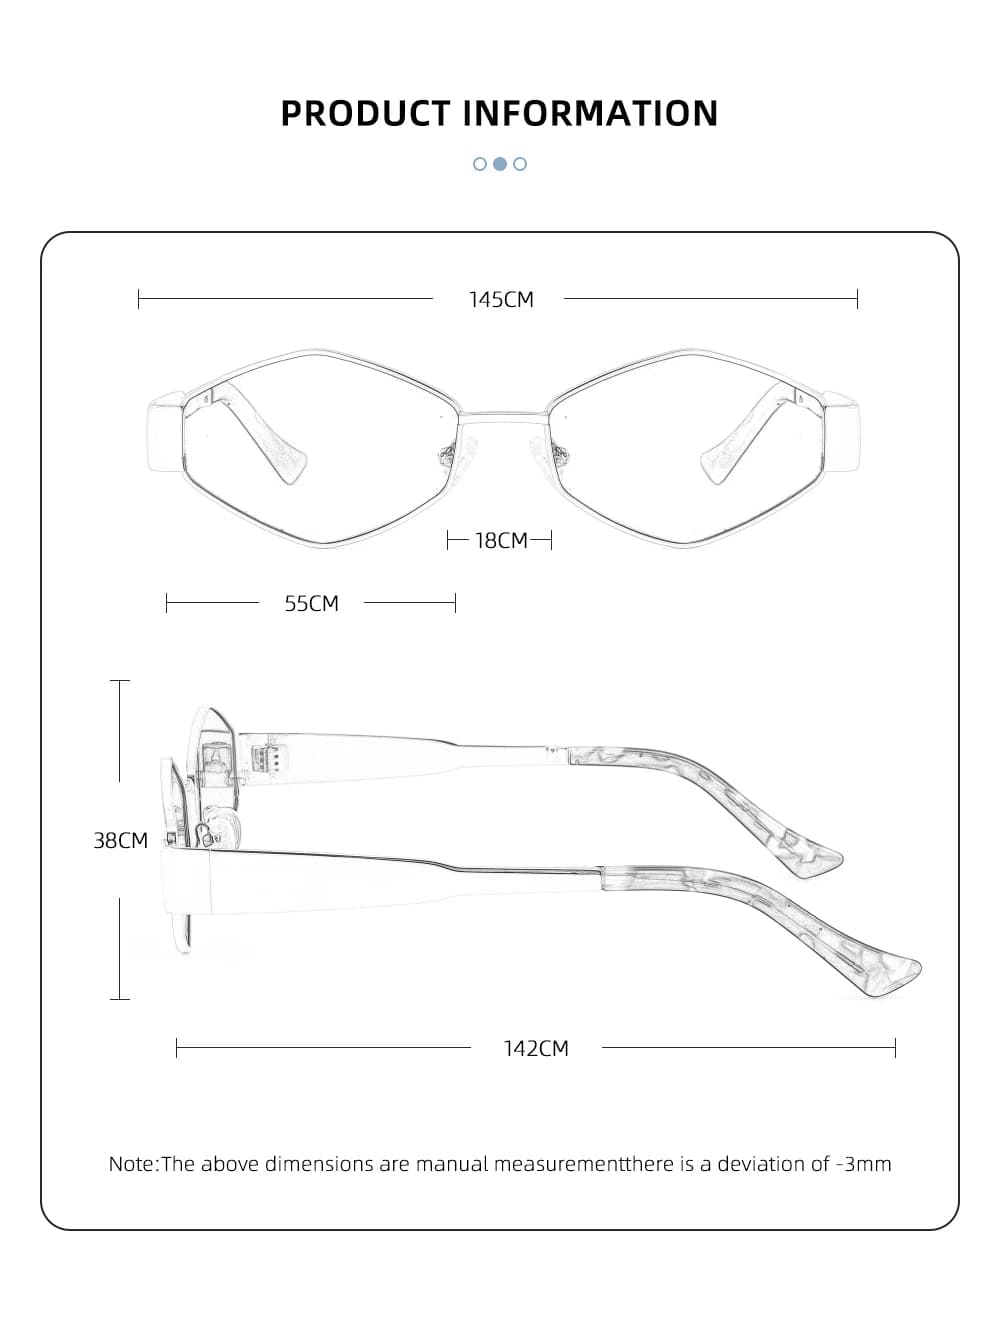 Vintage Polarized Sunglasses for Women - Alloy Frame, Oval Style - 38mm Lens Height, 55mm Lens Width - Model GLT9241 - Wandering Woman